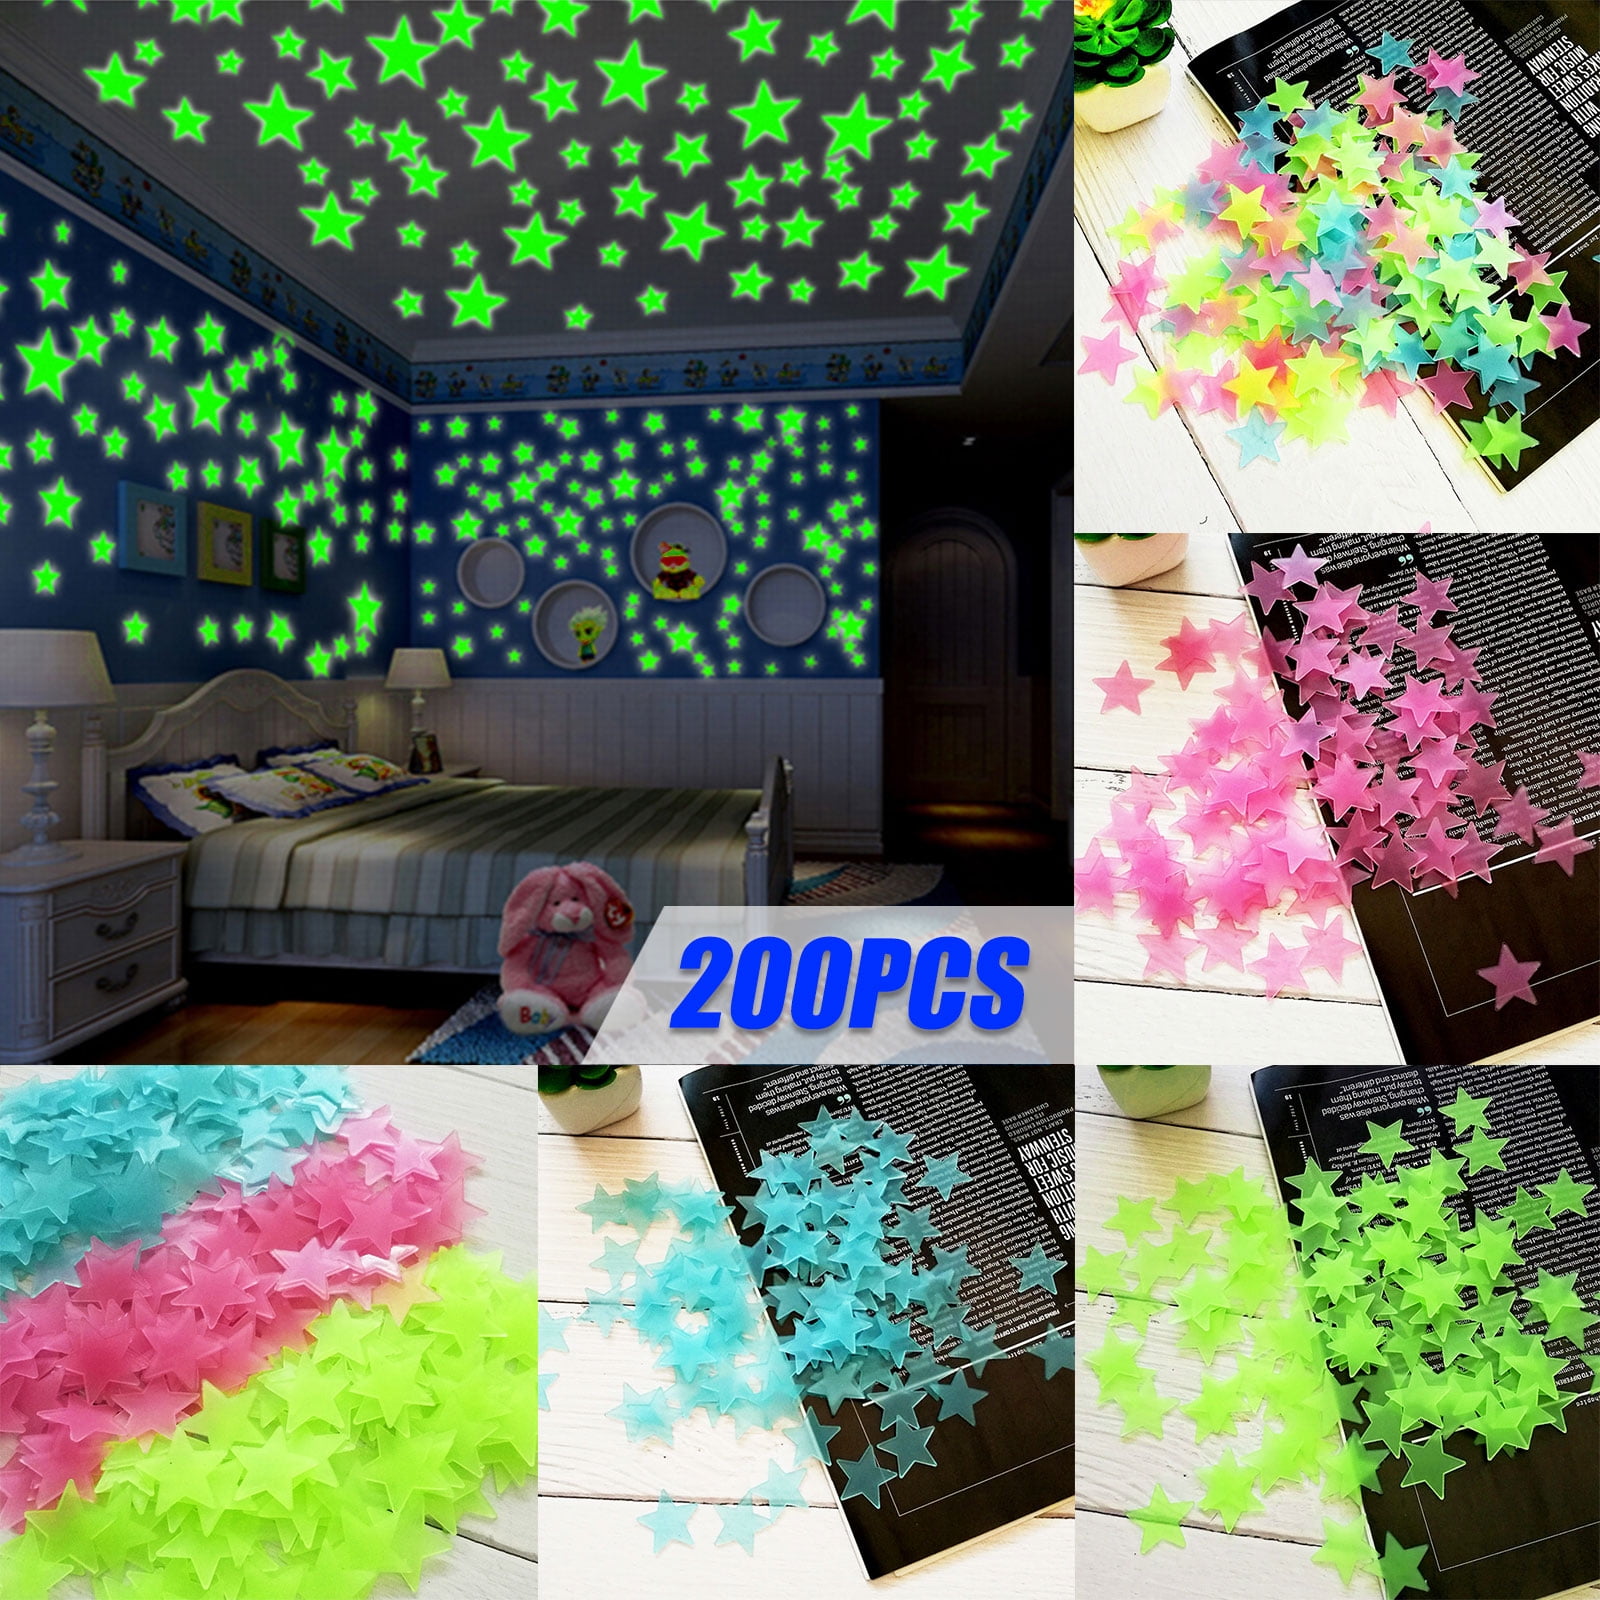 100 X Pcs Wall Glow In The Dark Star Stickers Kids Bedroom Nursery Room Decor 